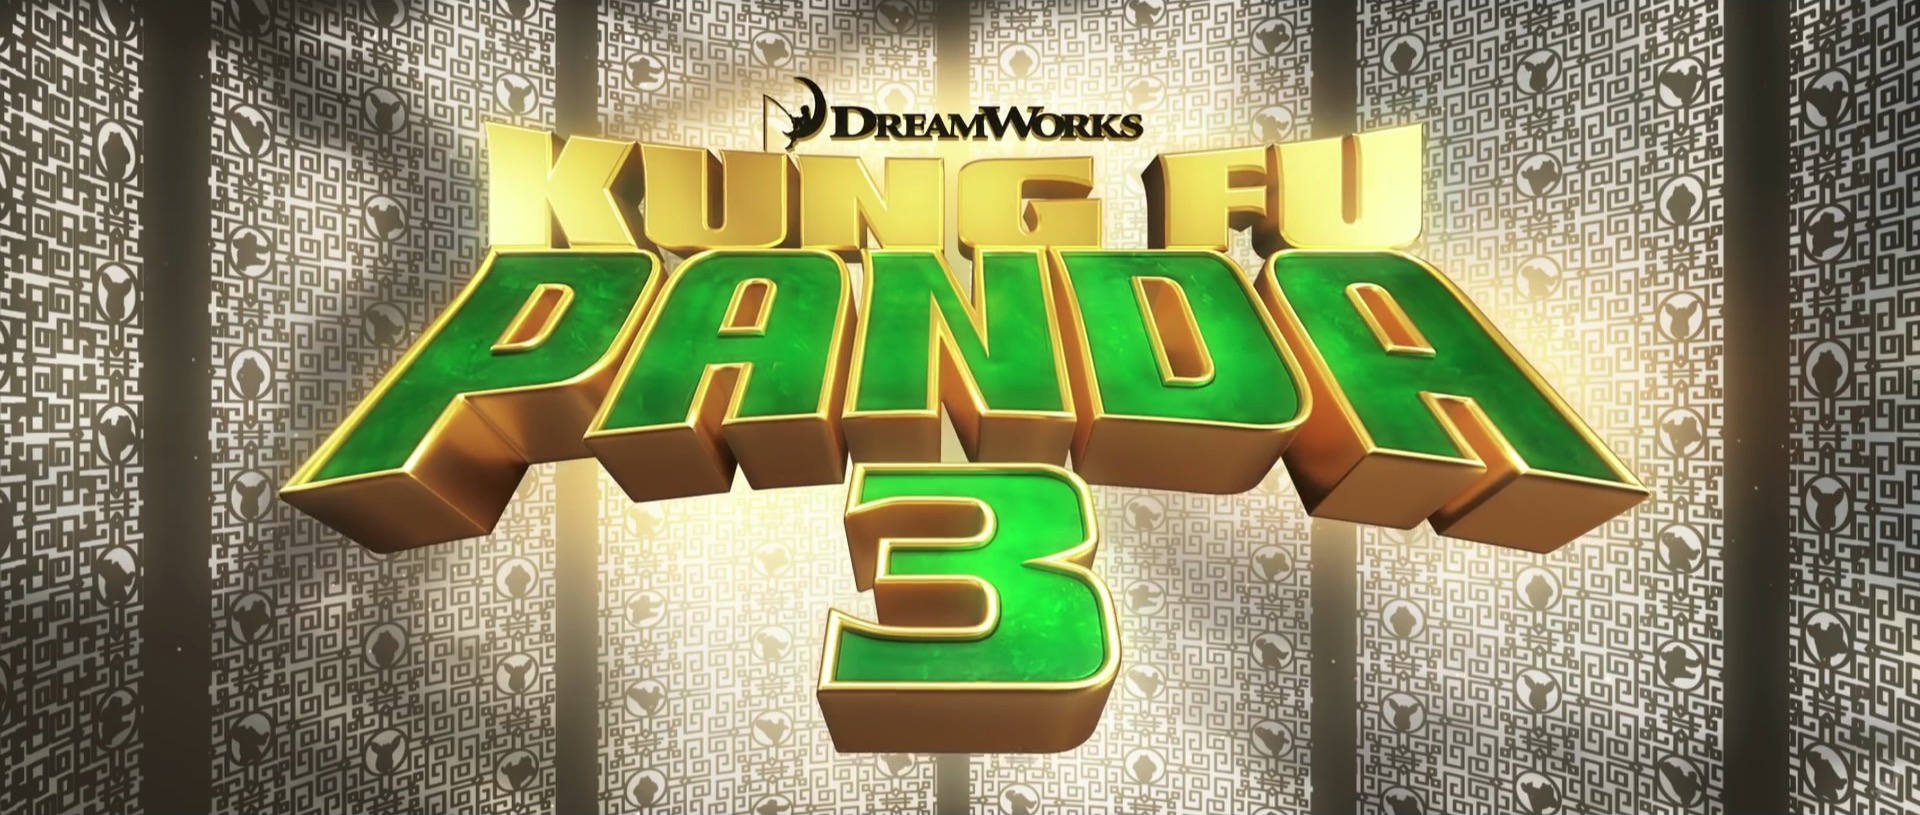 Kung Fu Panda 3 Title - HD Wallpaper 